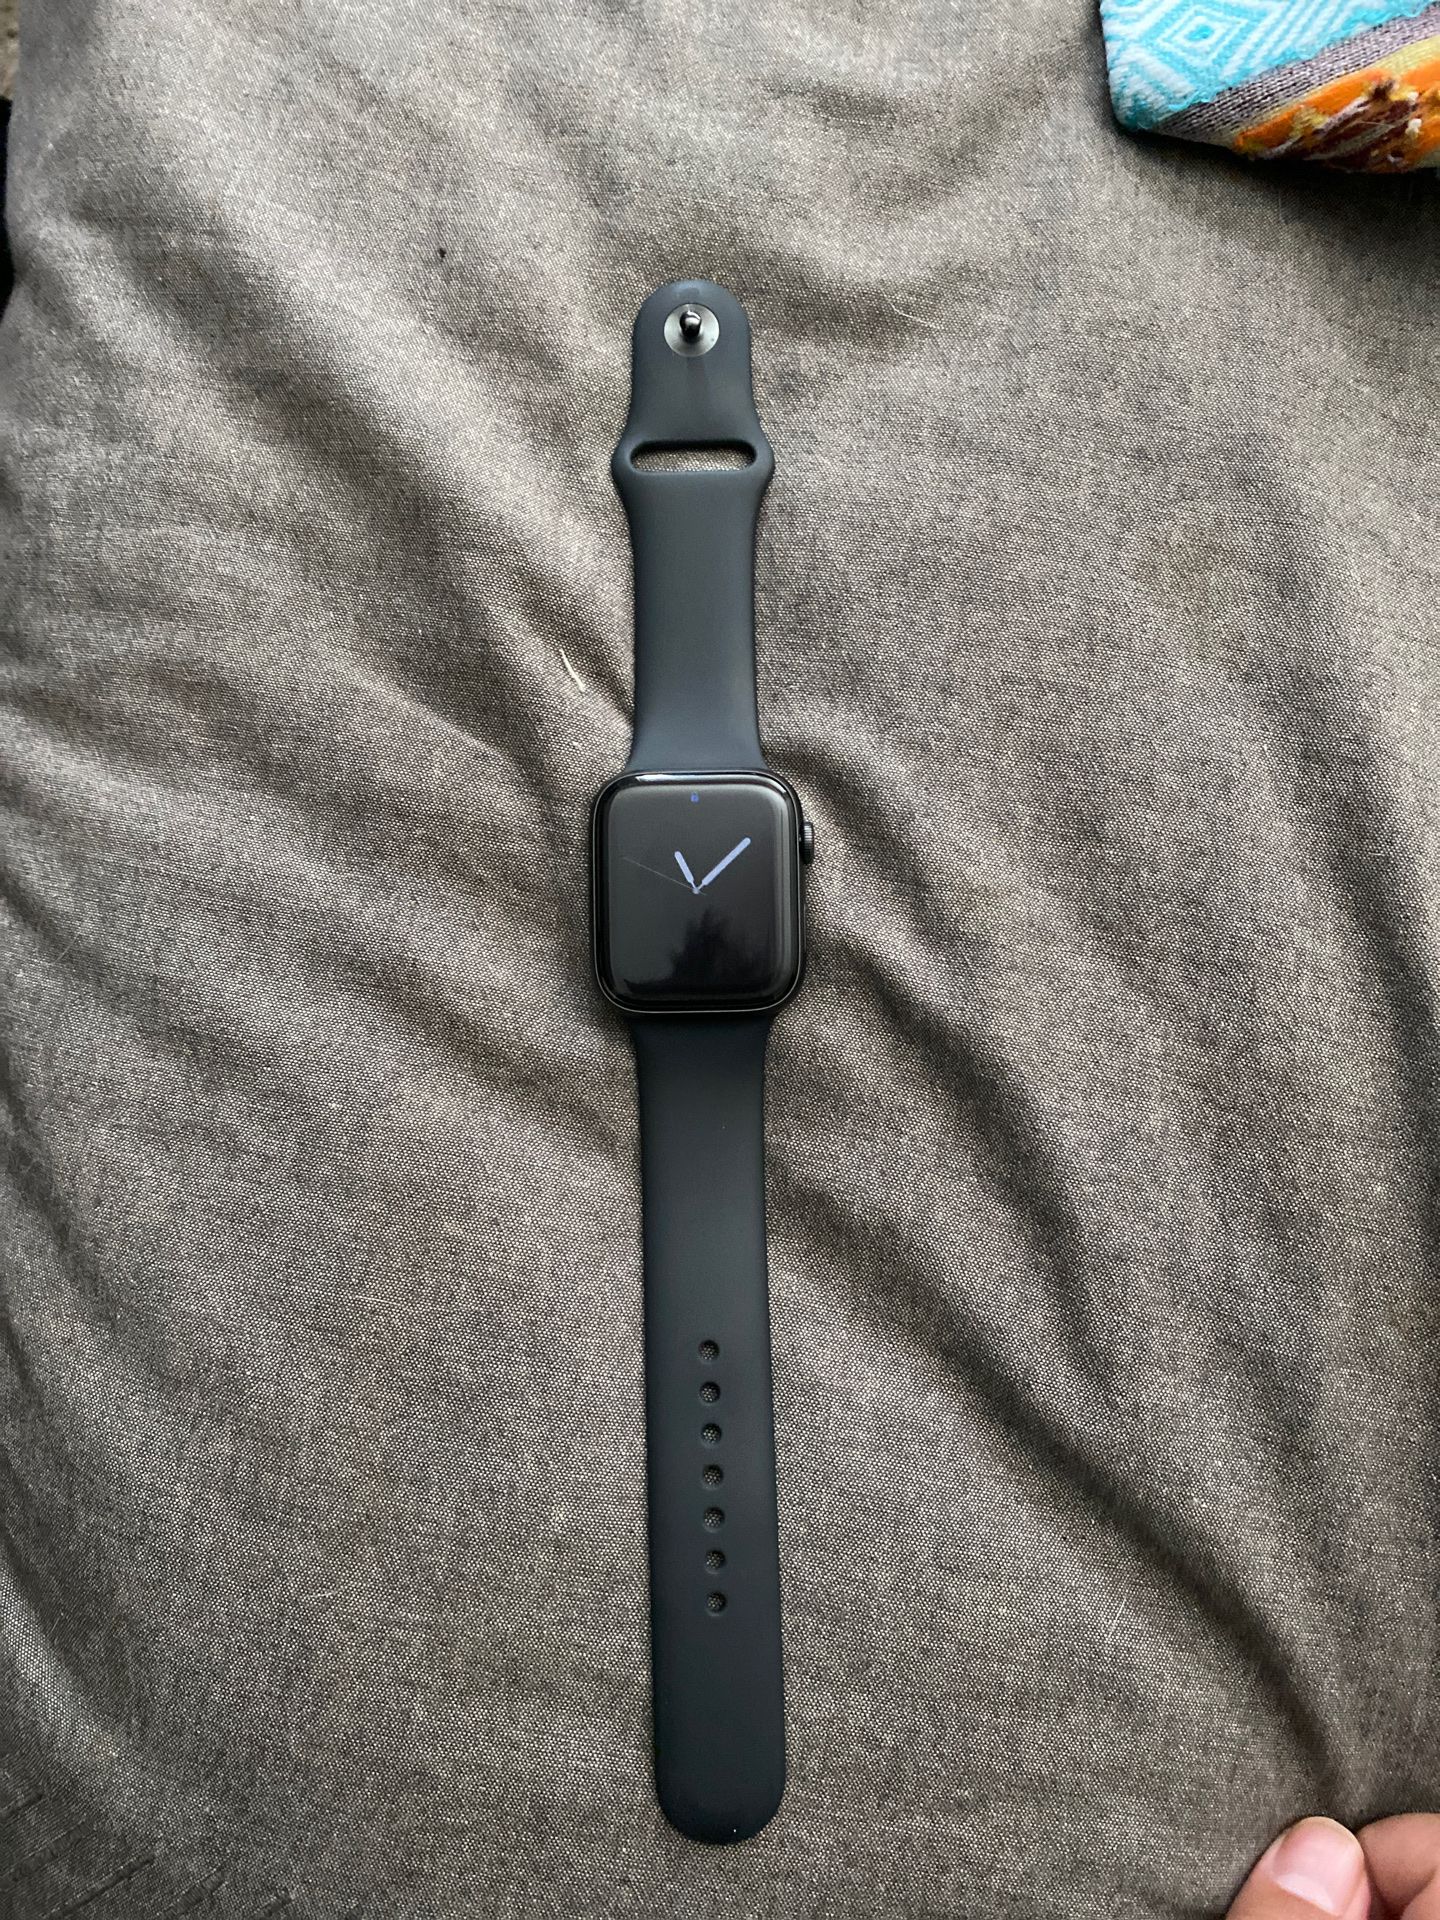 Apple Watch Series 5 w/ Cellular